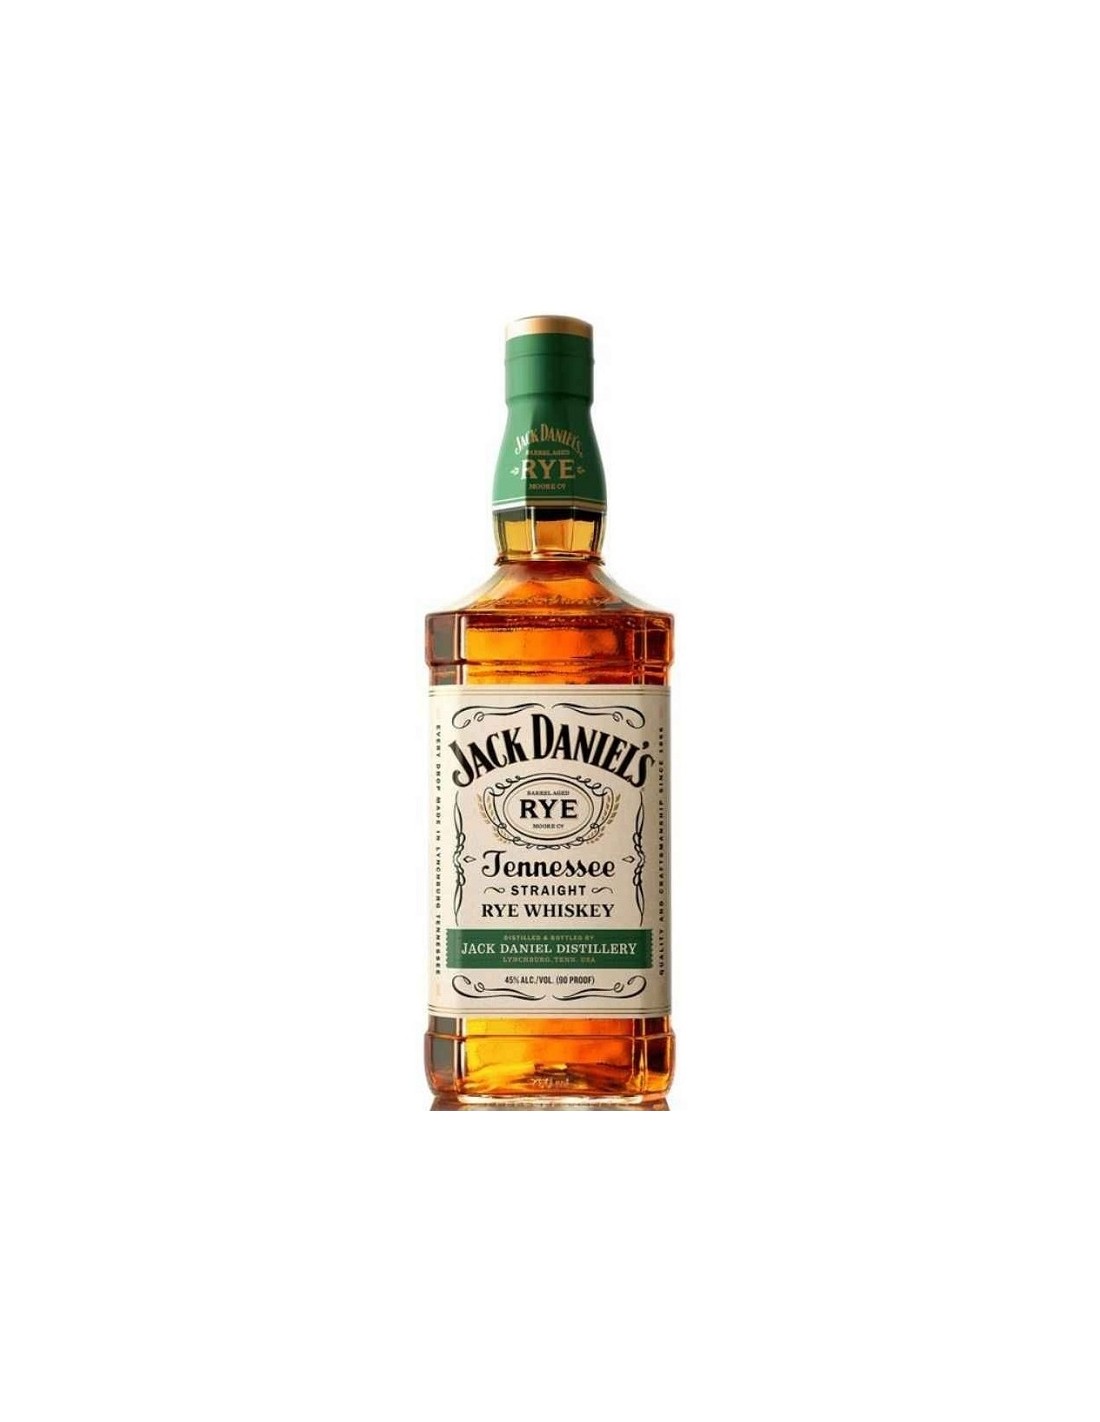 Whisky Jack Daniel’s Rye, 0.7L, 45% alc., SUA alcooldiscount.ro